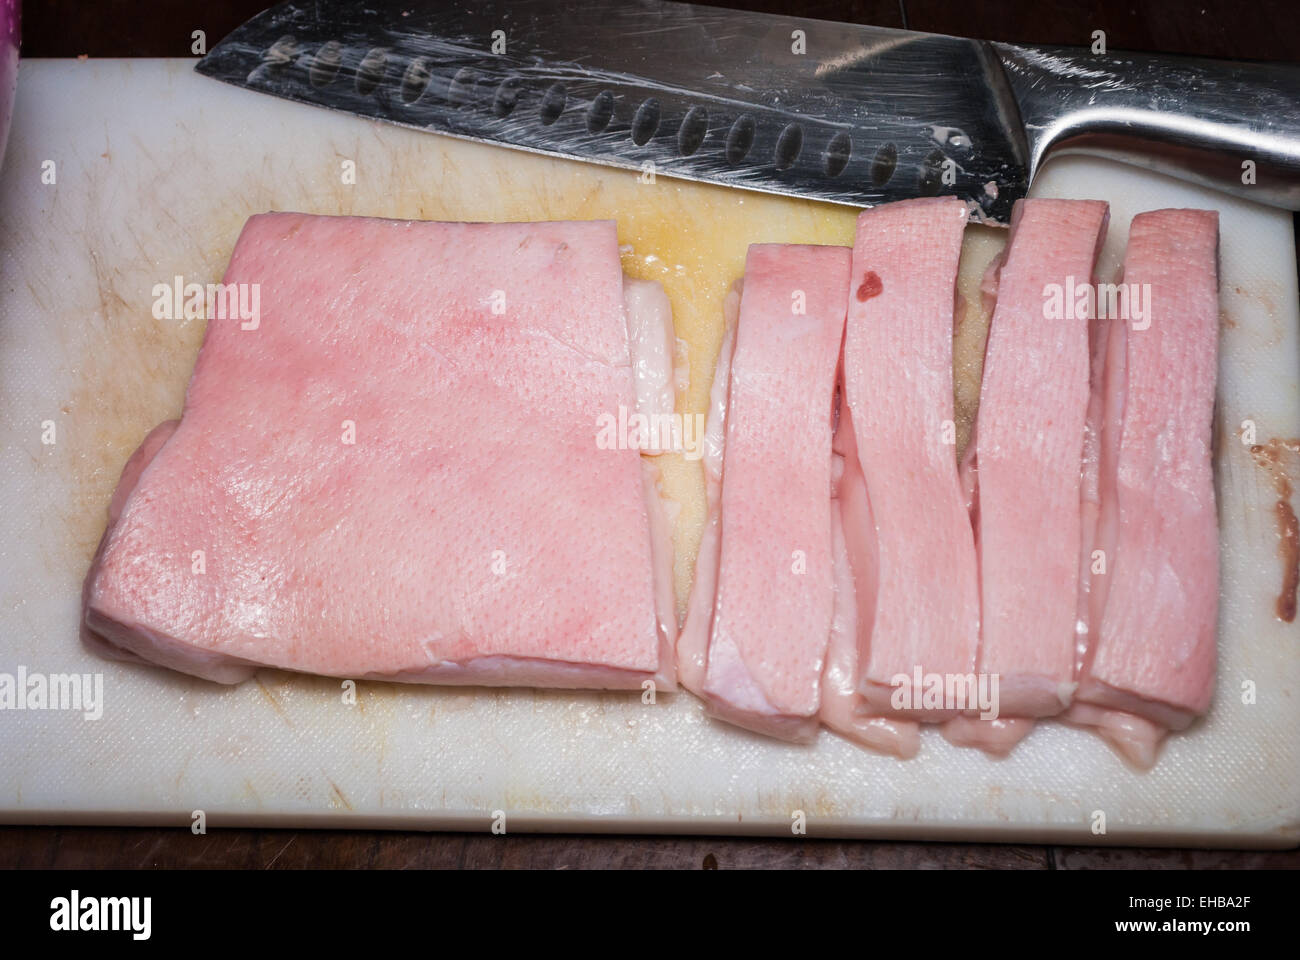 Cut Raw Pork Skin on Chopping Board. Stock Photo